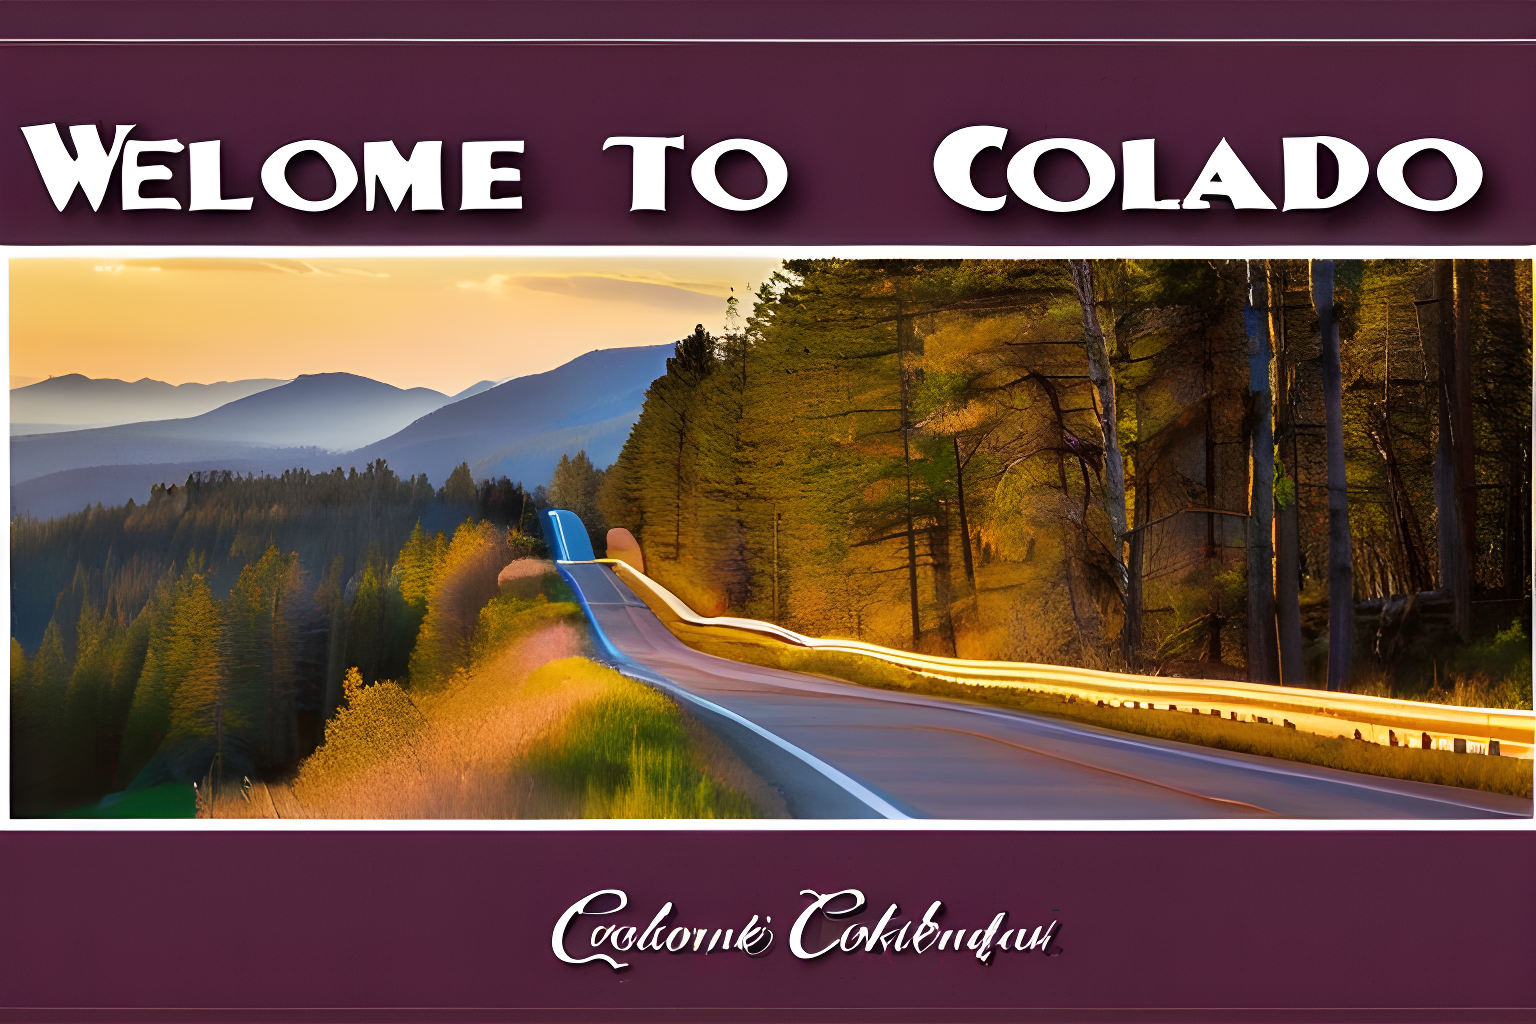 "welcome to colorado"